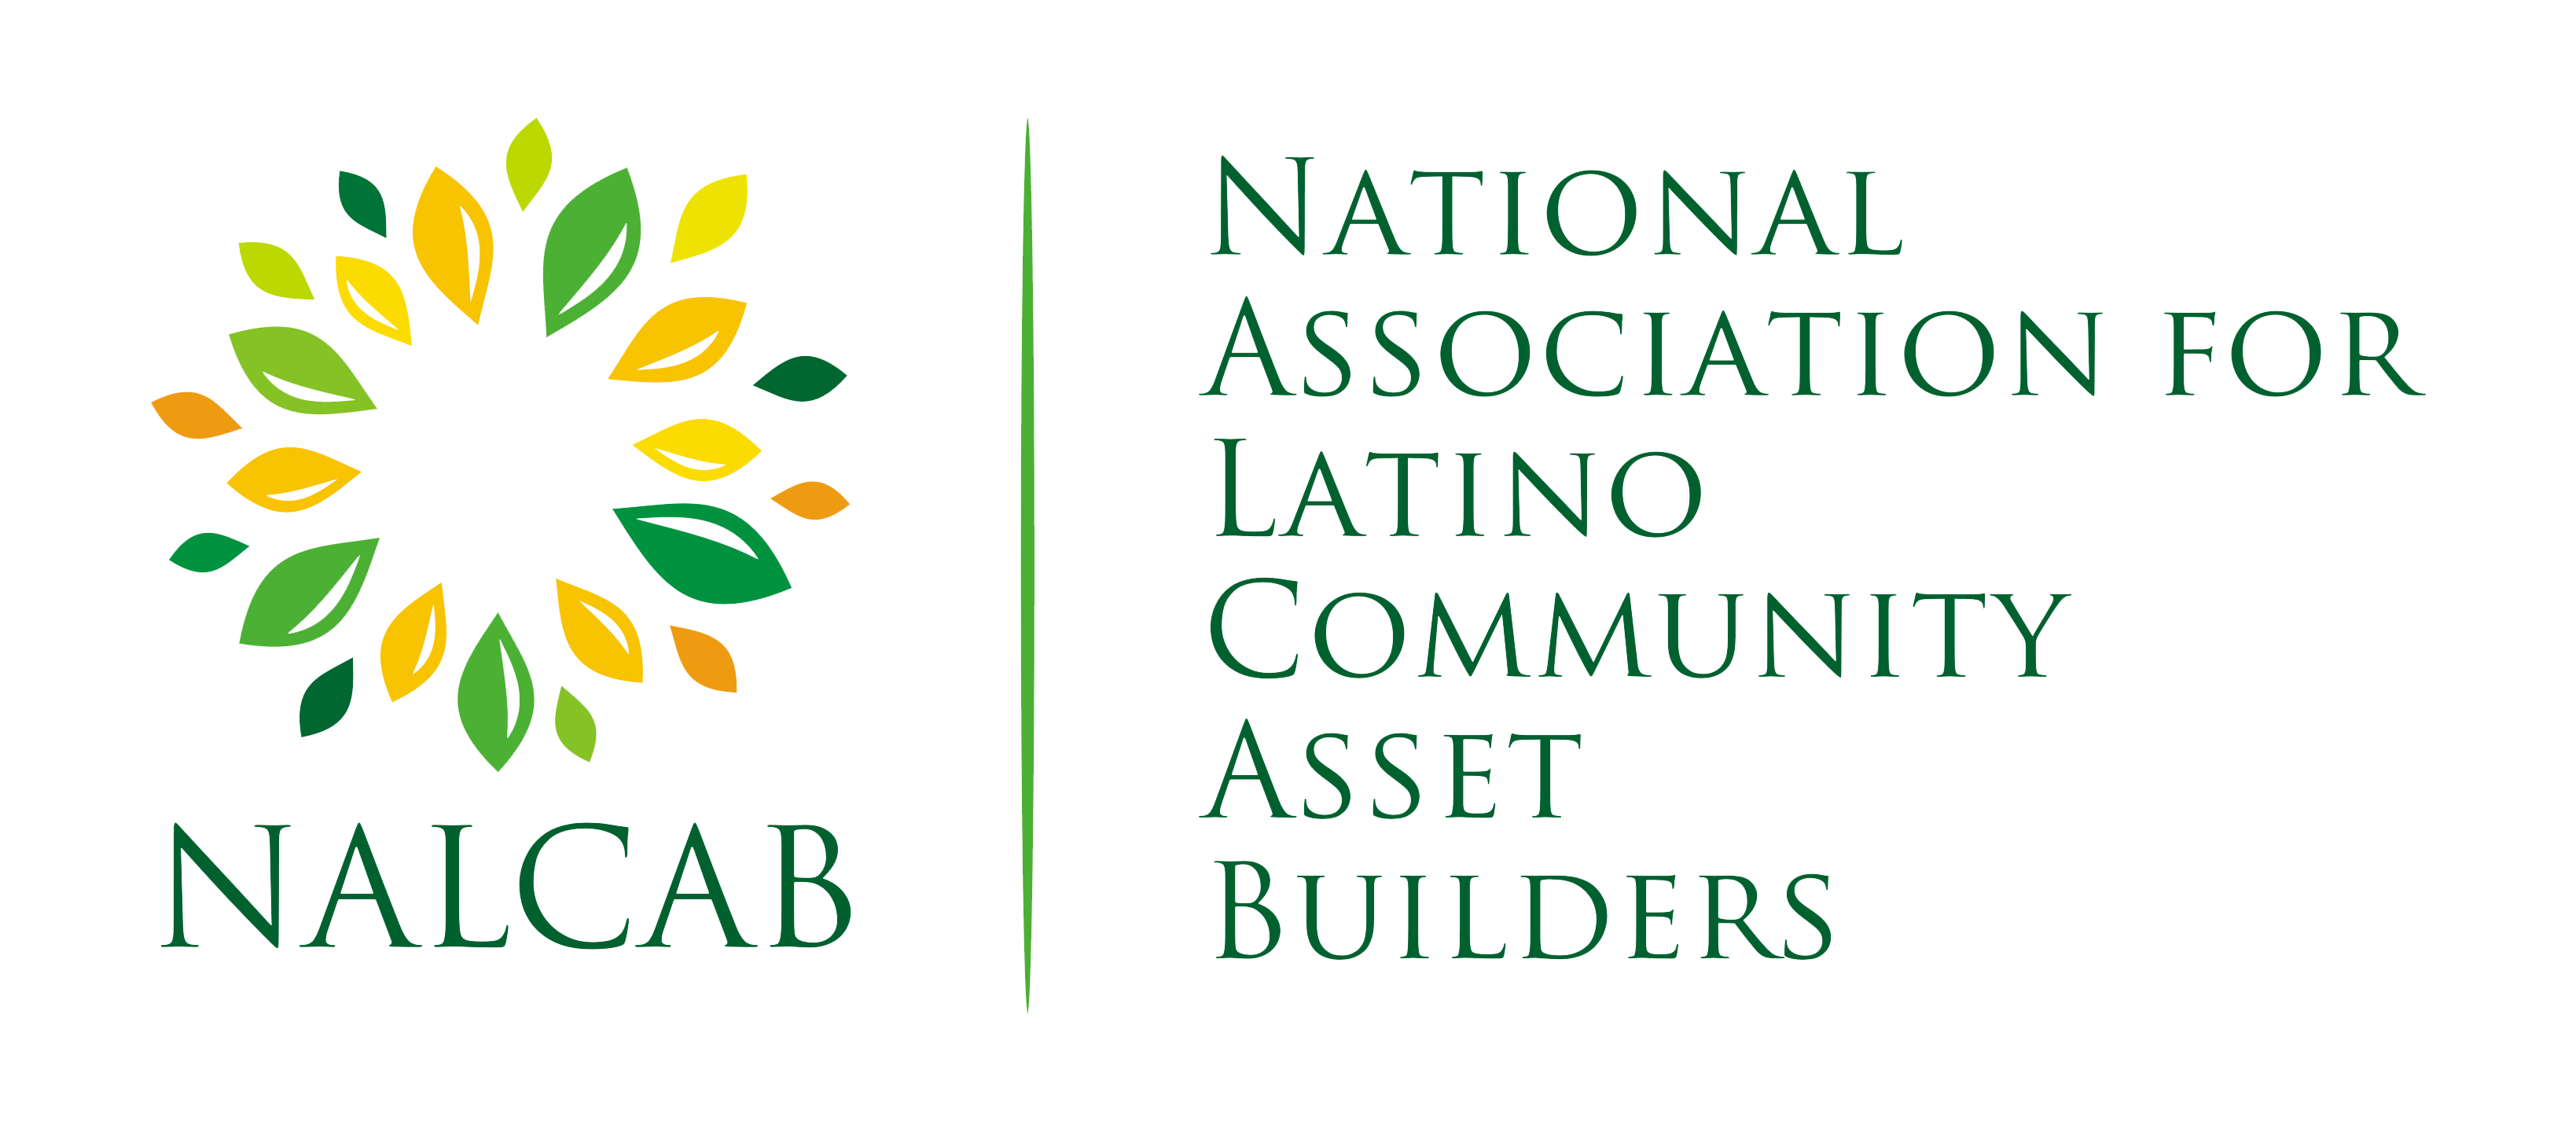 NALCAB logo